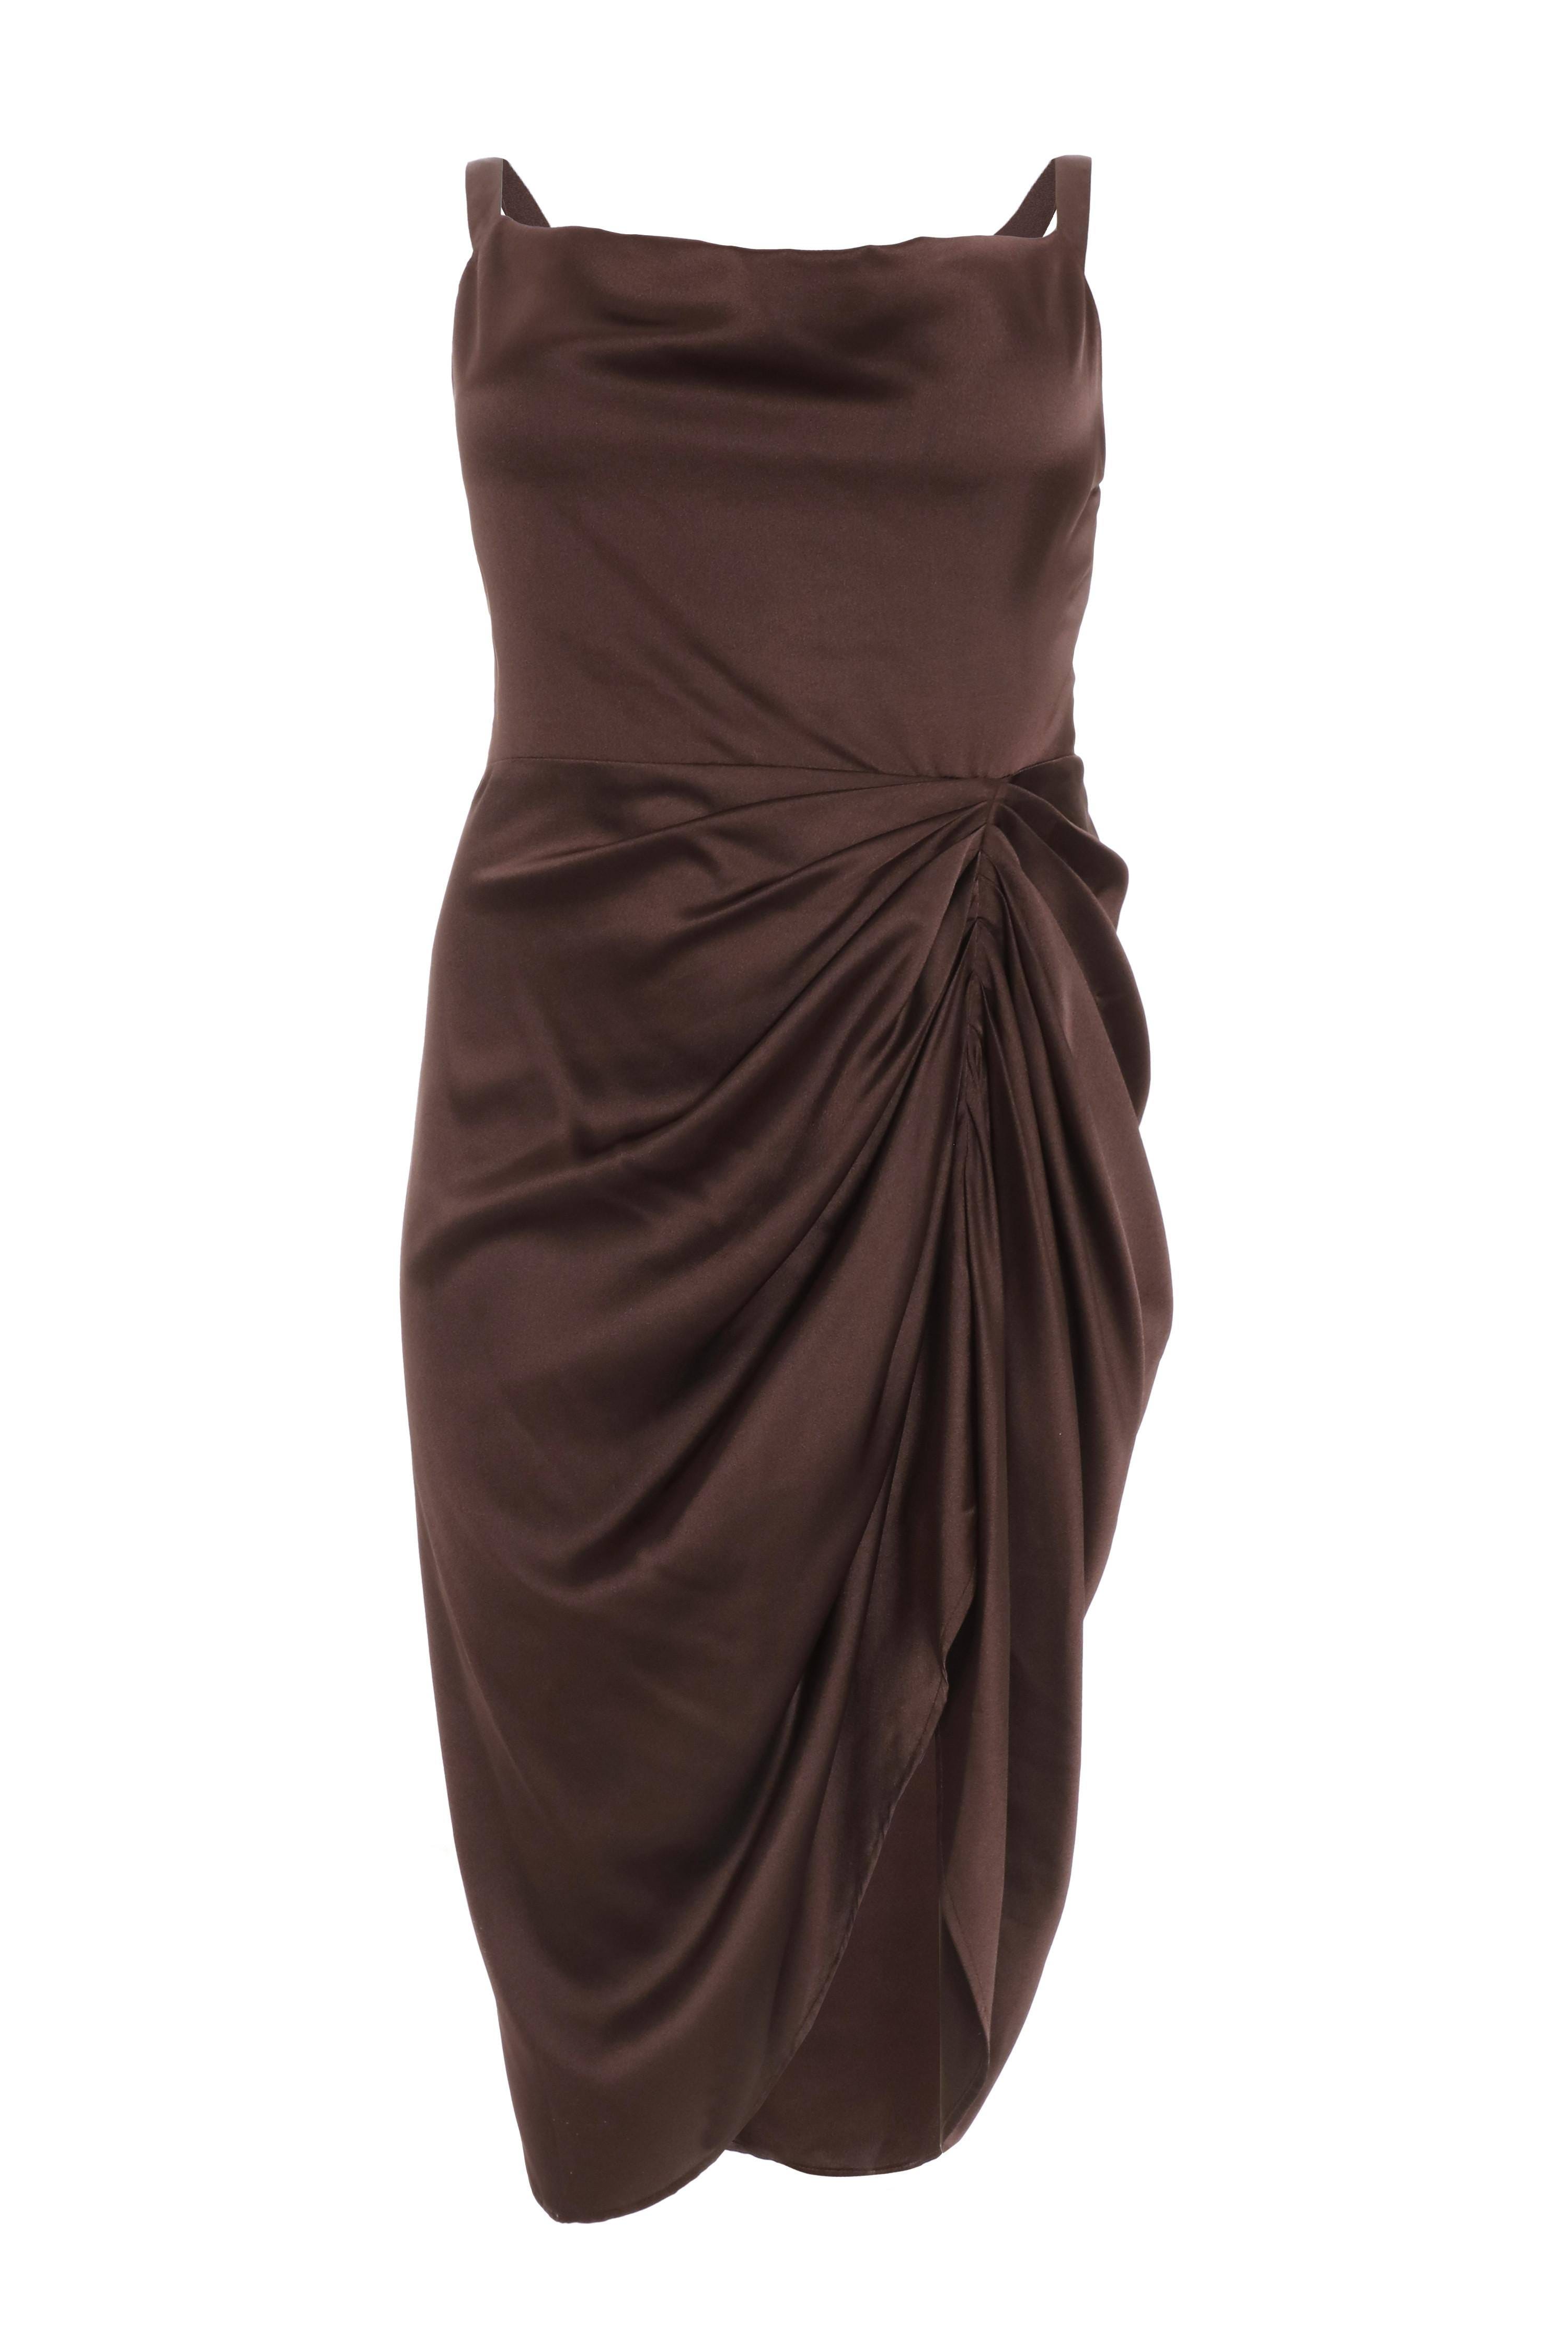 Chocolate Brown Satin Midi Dress for Plus Size Women | Image